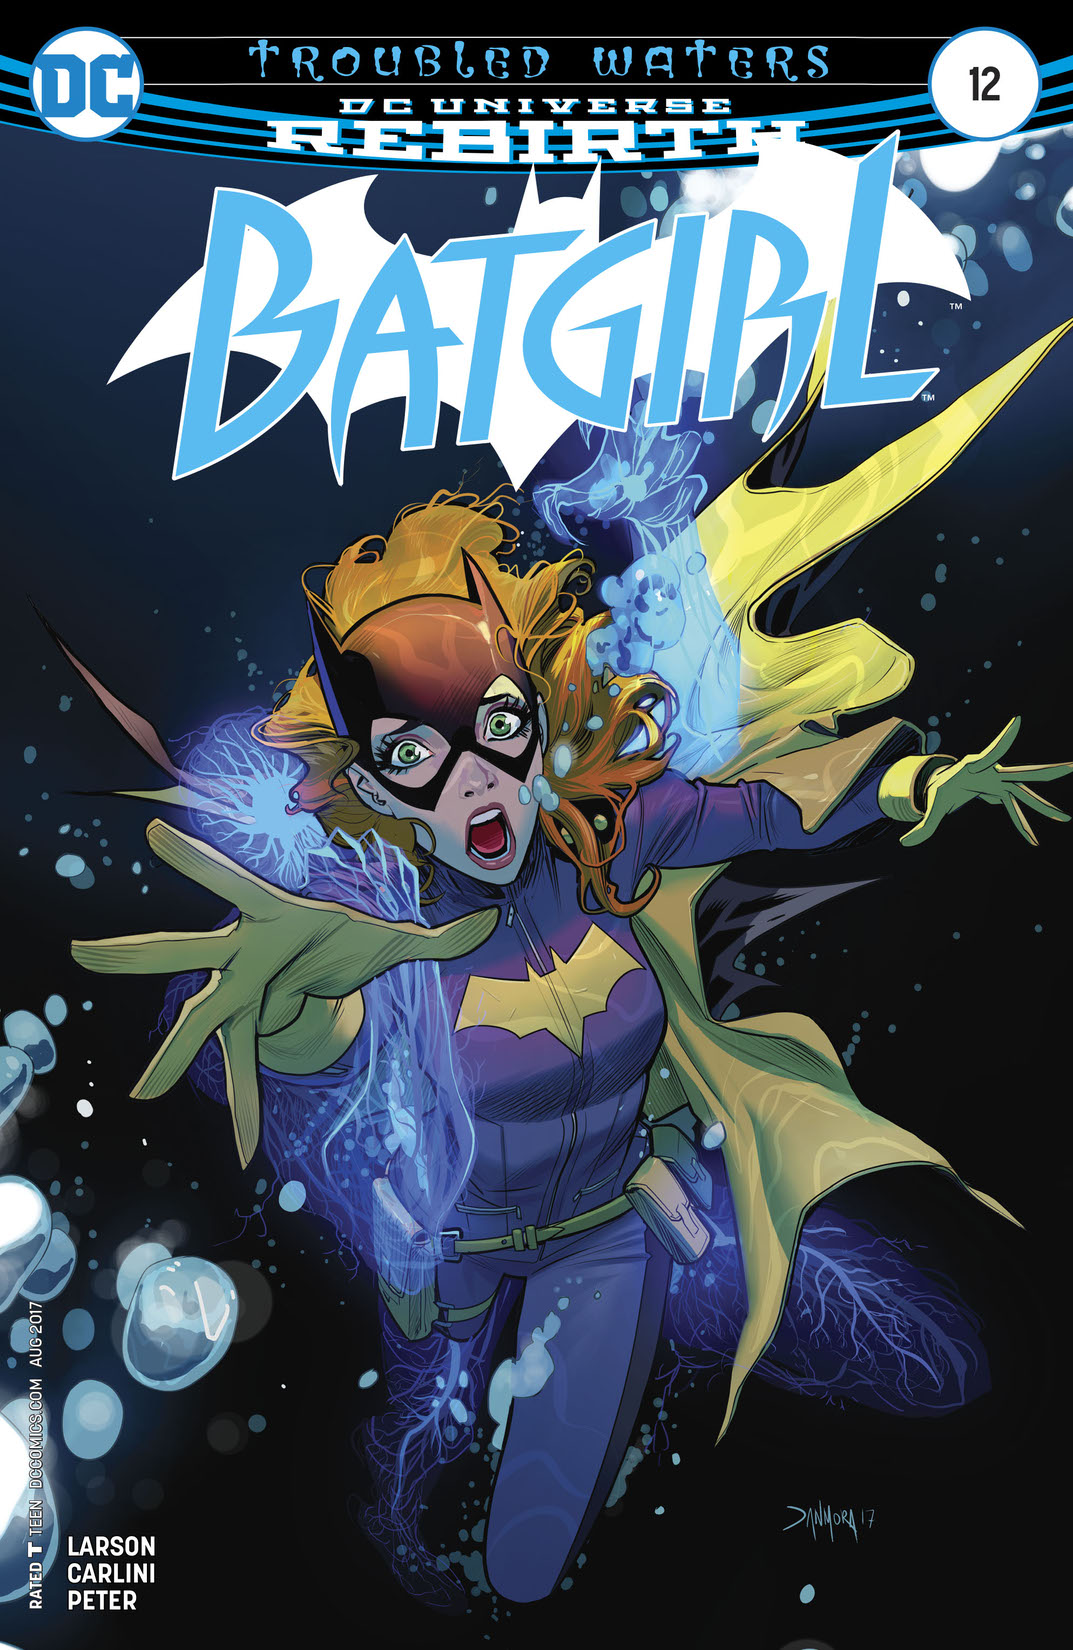 Batgirl (2016-) #12 preview images